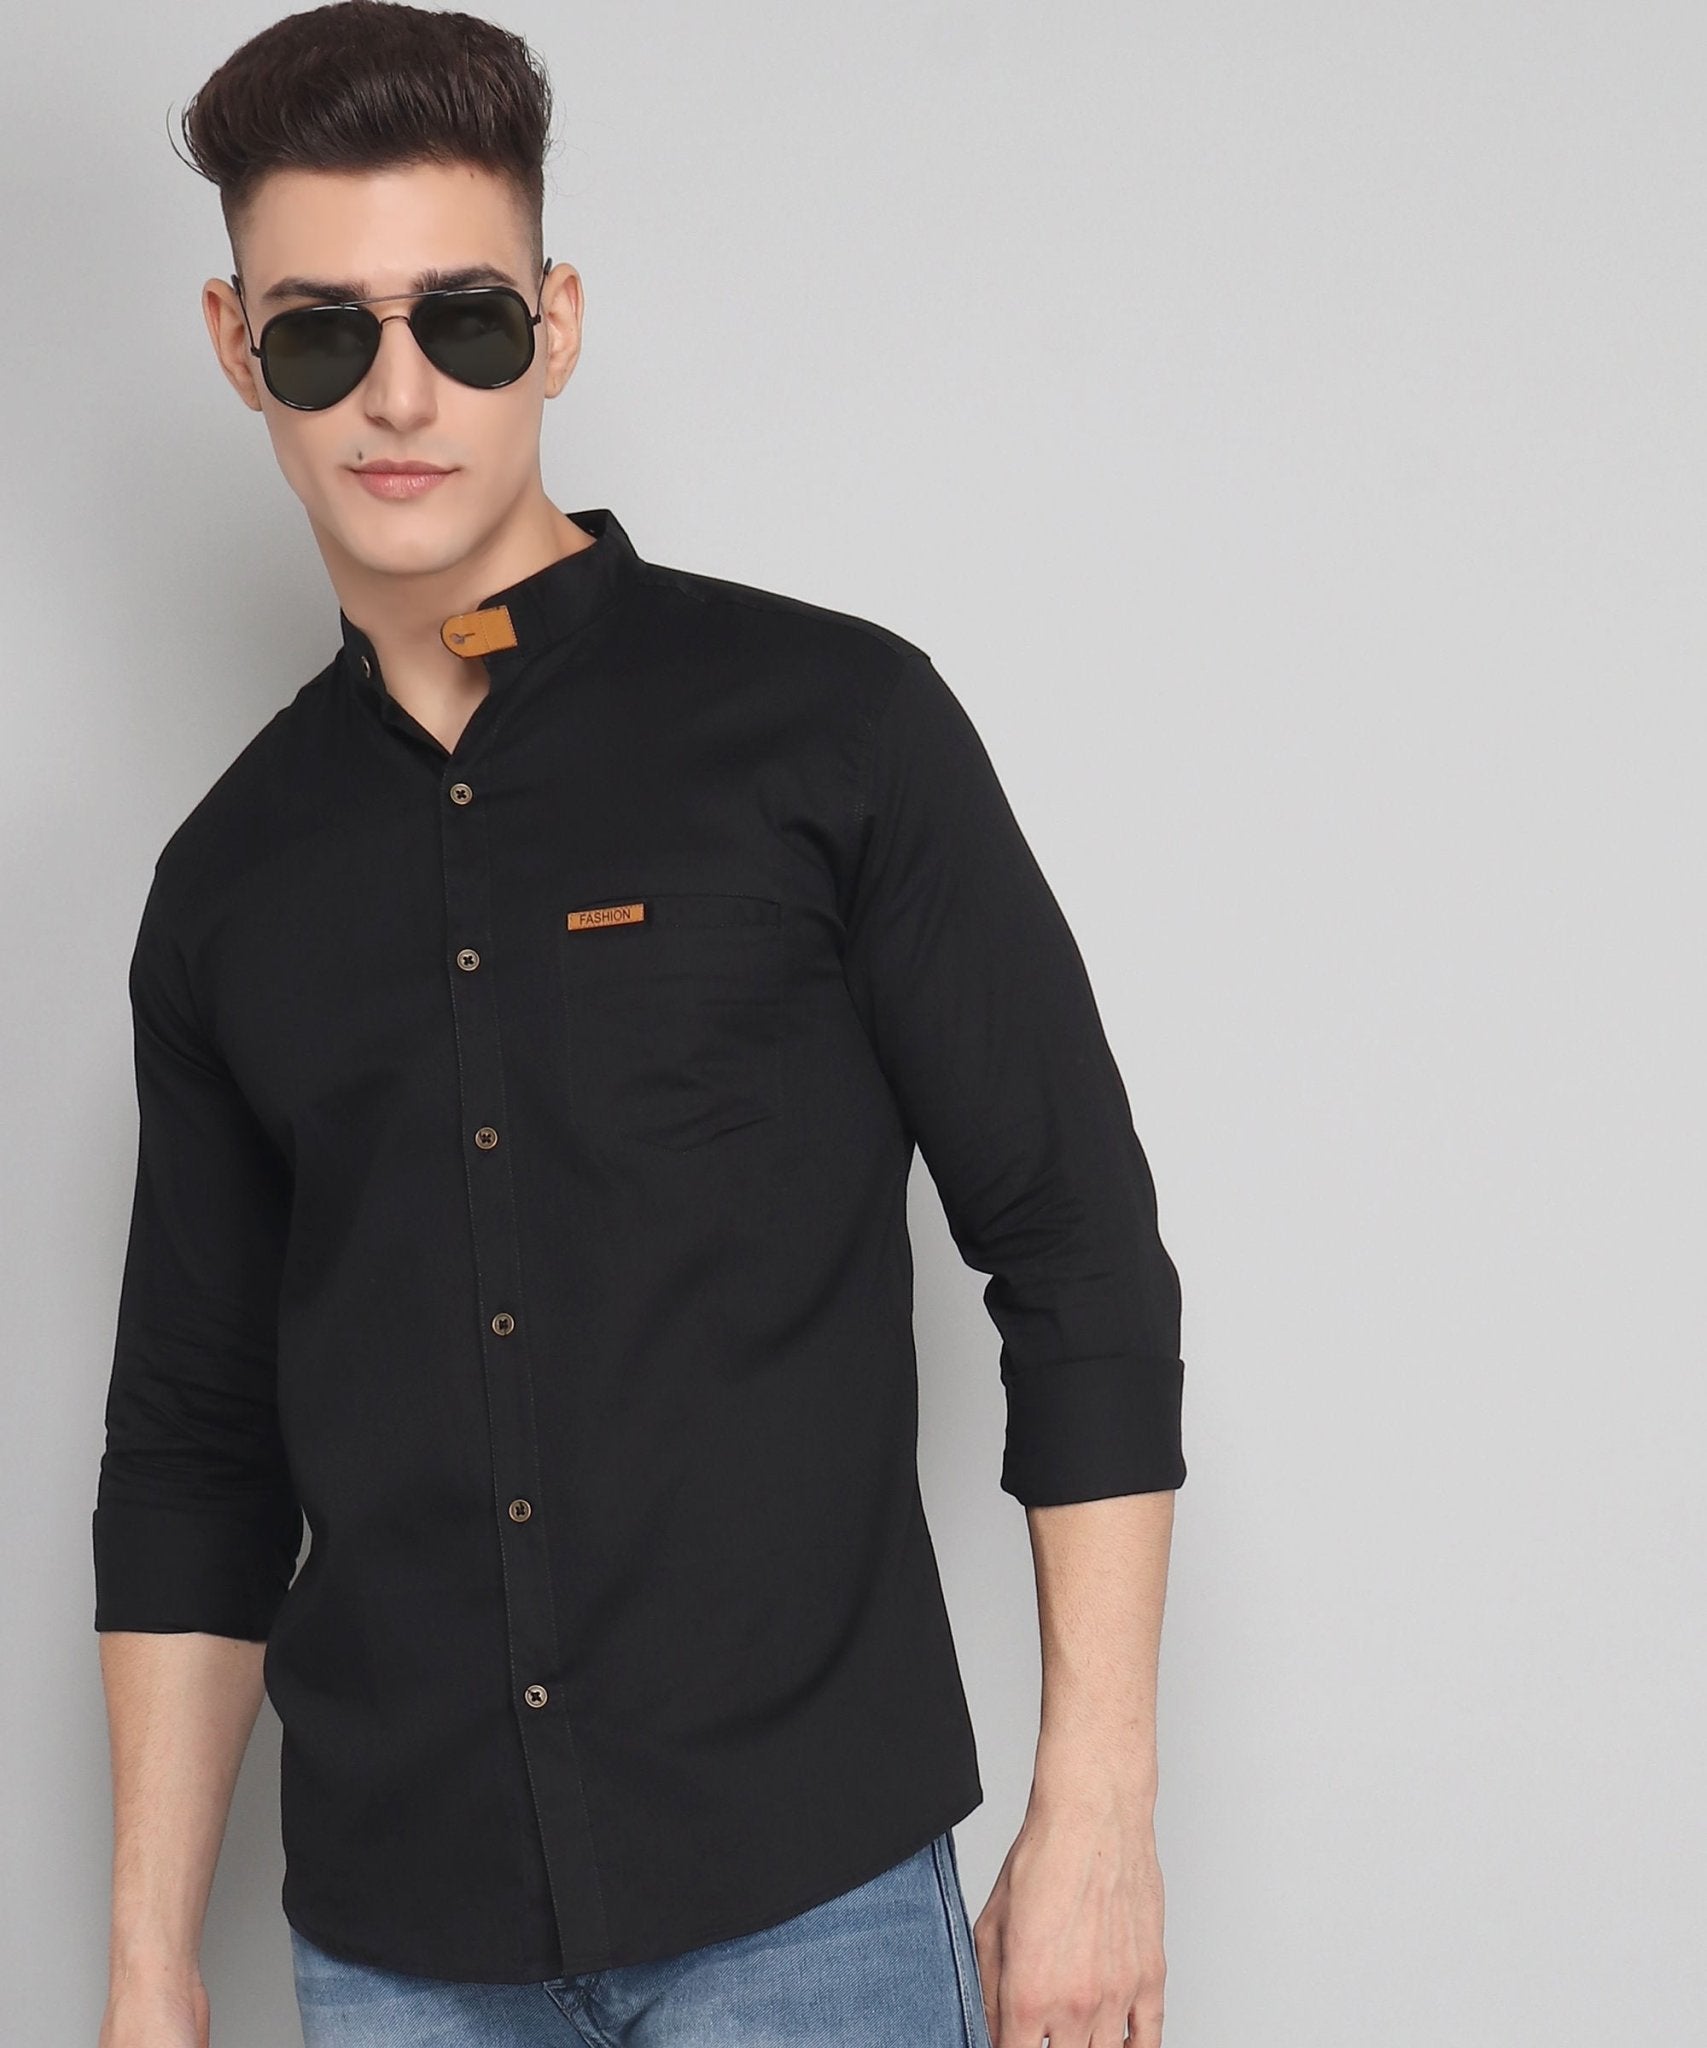 TryBuy Premium Classy Ravishing Black Casual Cotton Solid Men's Shirt - TryBuy® USA🇺🇸